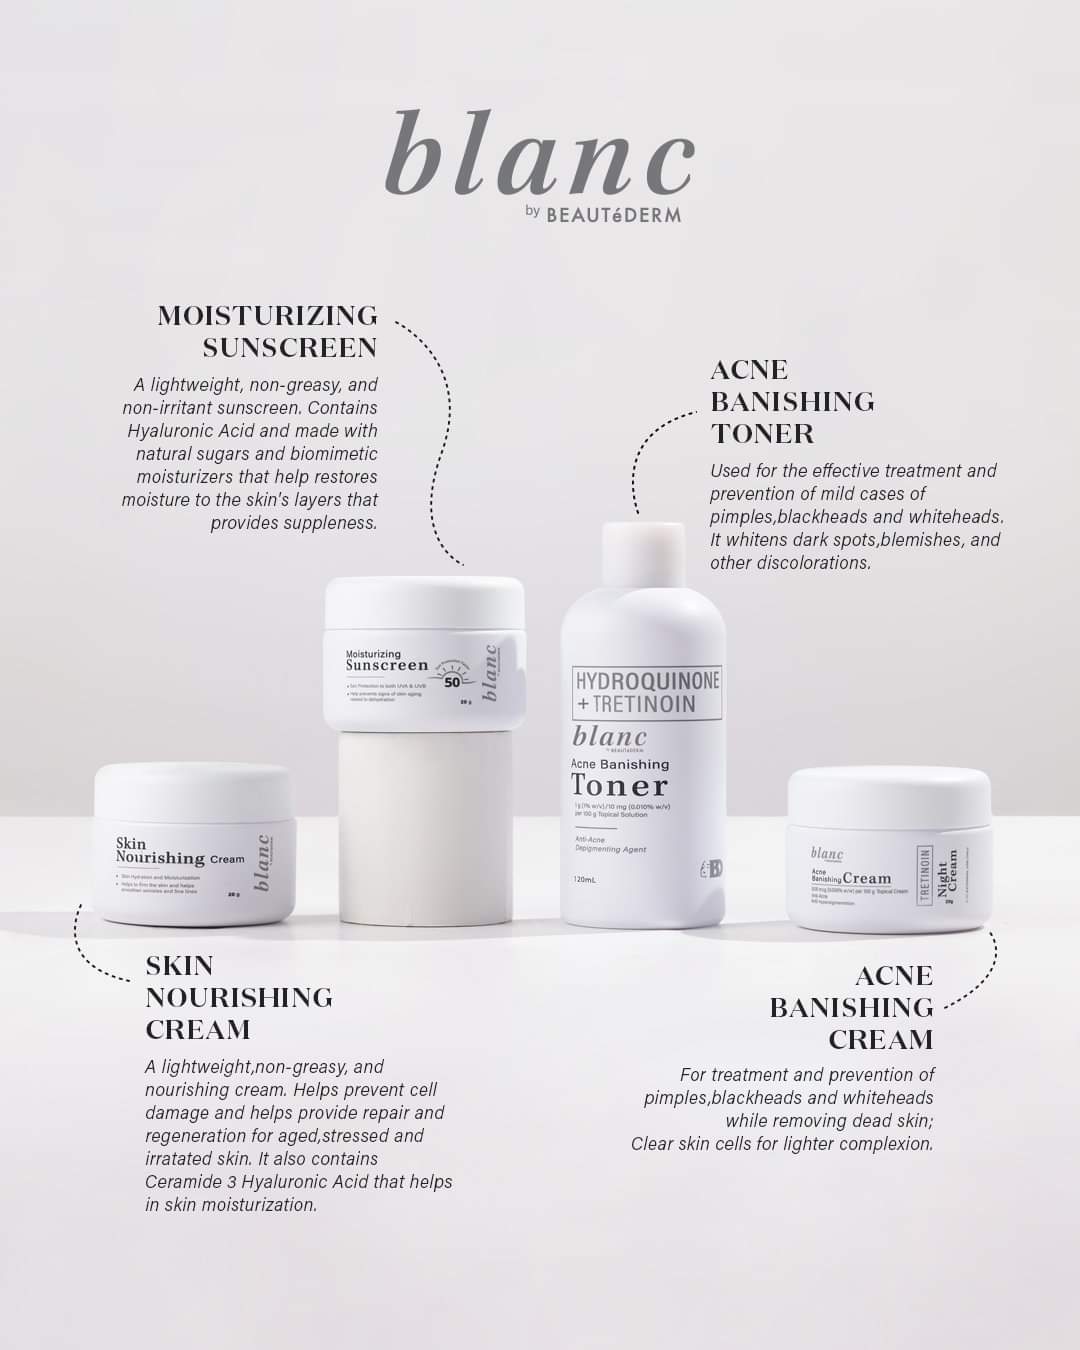 Blanc - Acne Banishing Toner 120ml